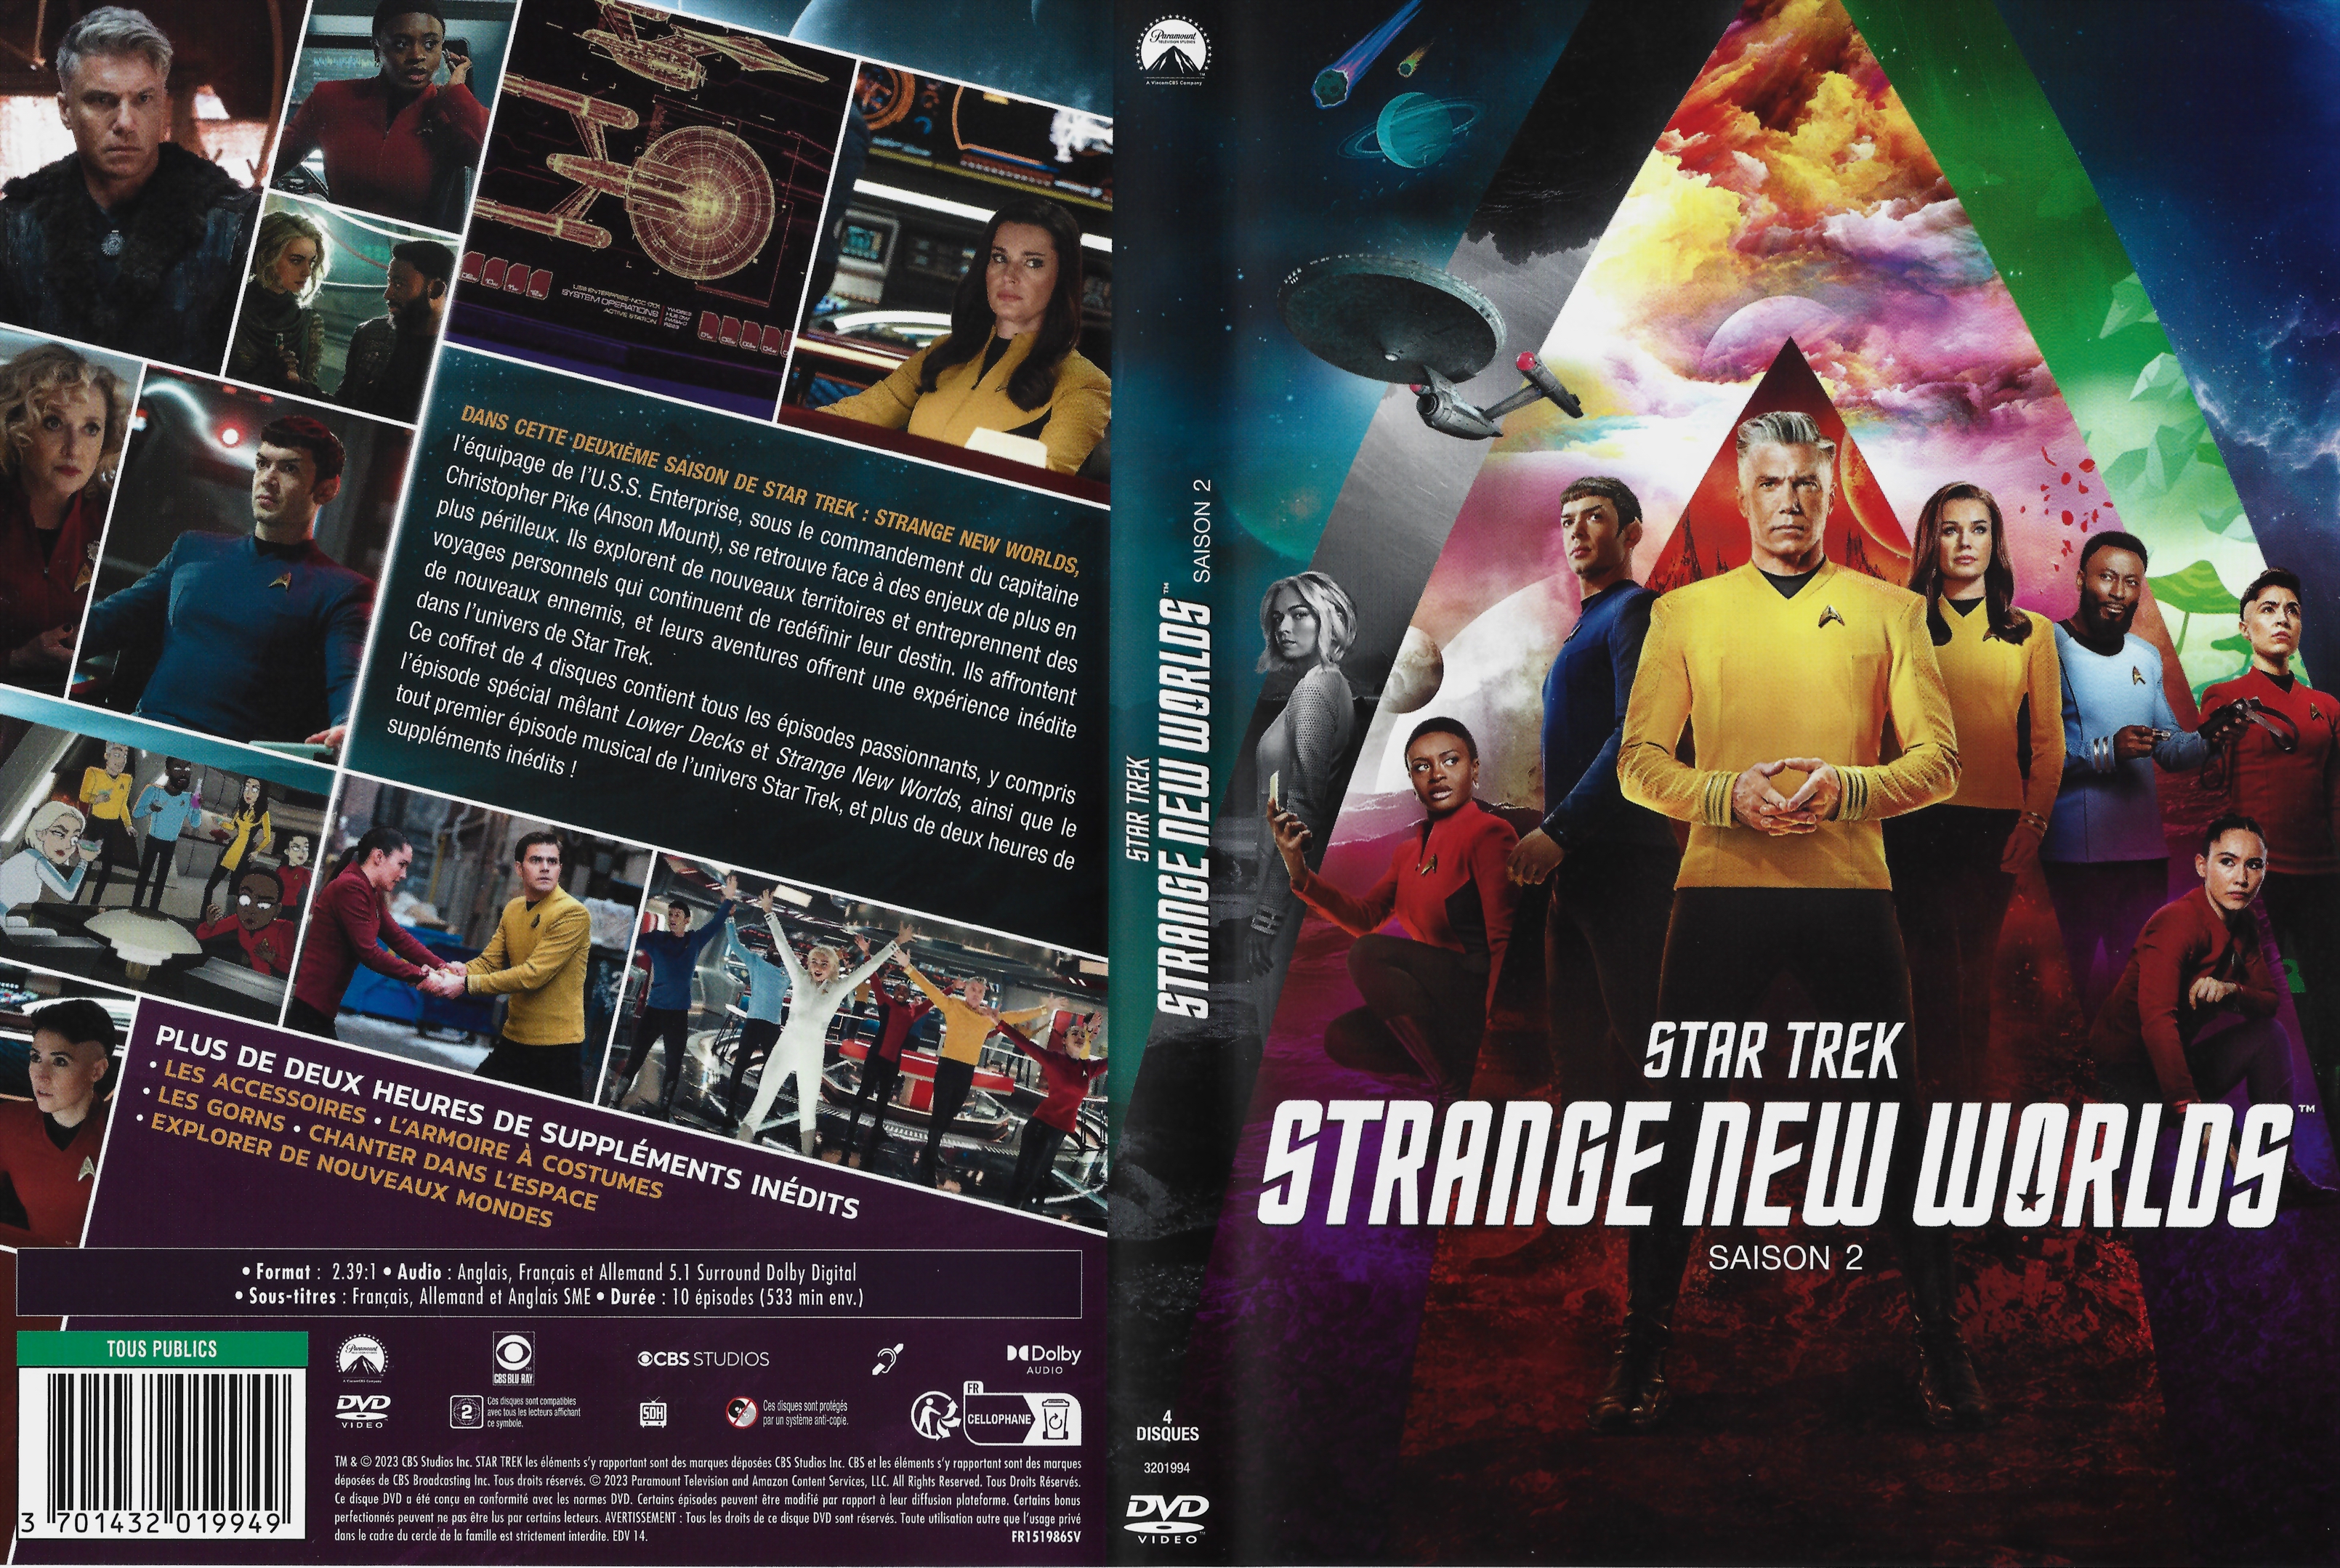 Jaquette DVD Star Trek Strange New Worlds saison 2